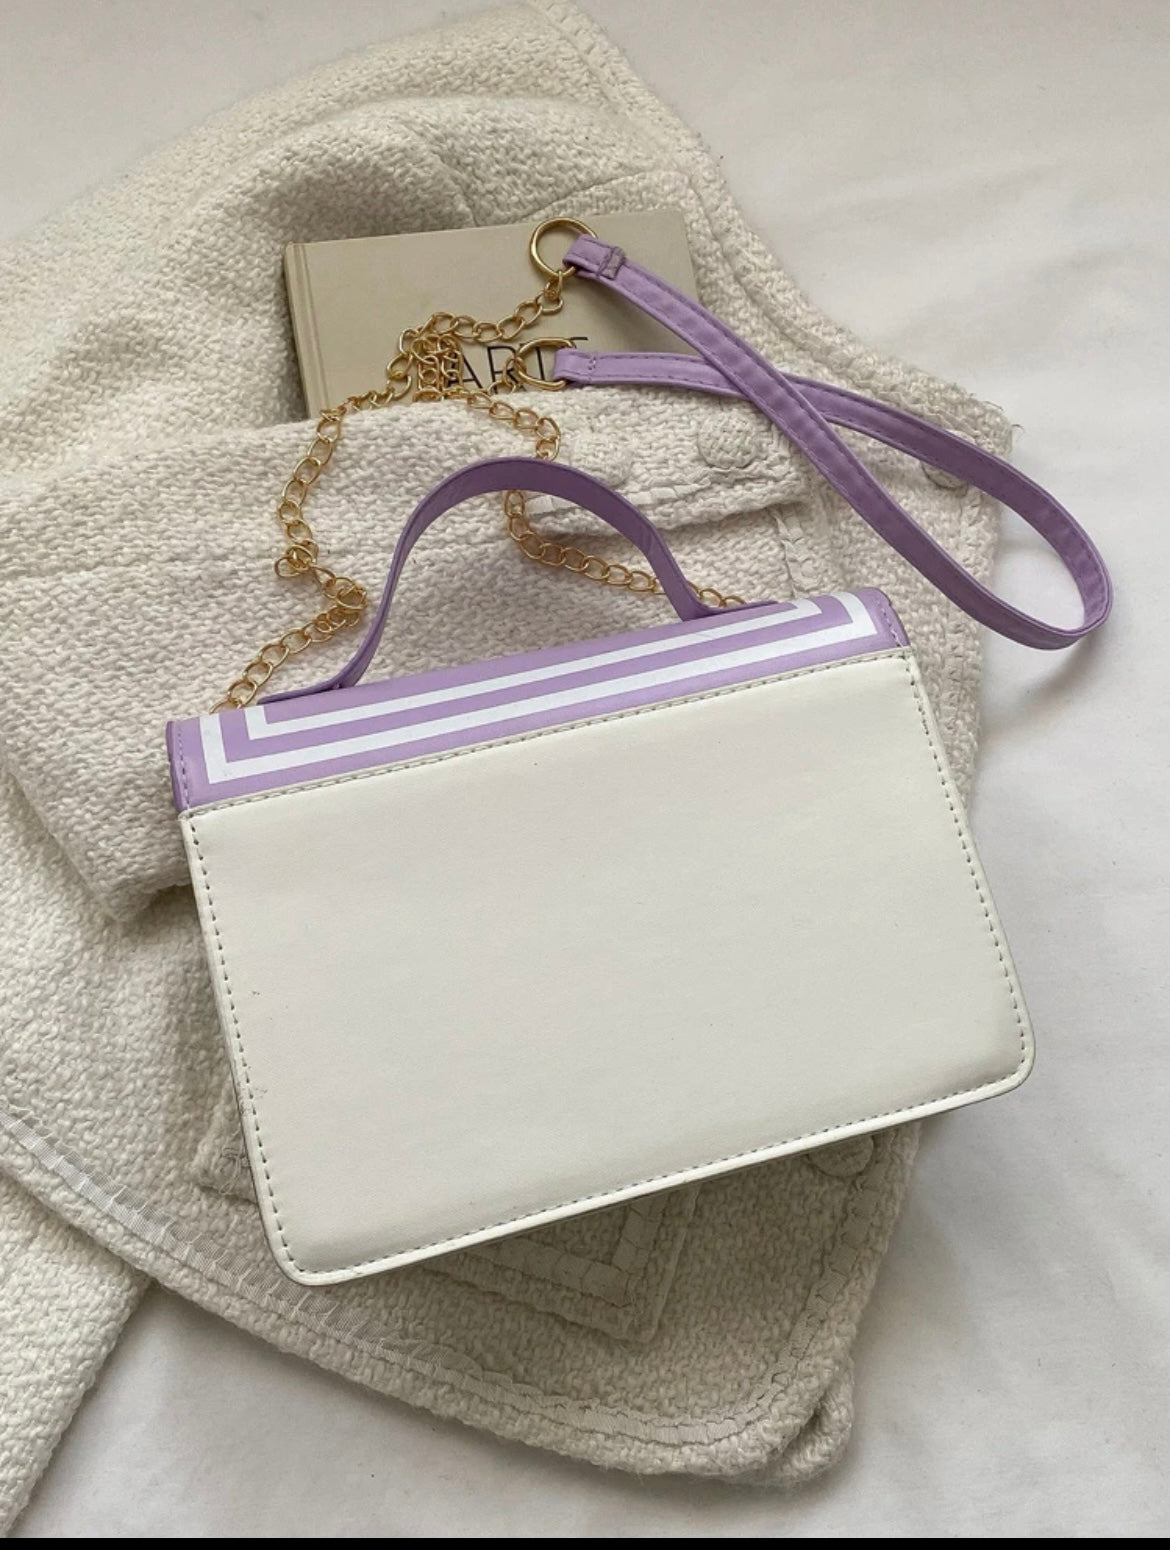 MKJ Luxury New Women's Brand Shoulder Bag Temperament Handbag